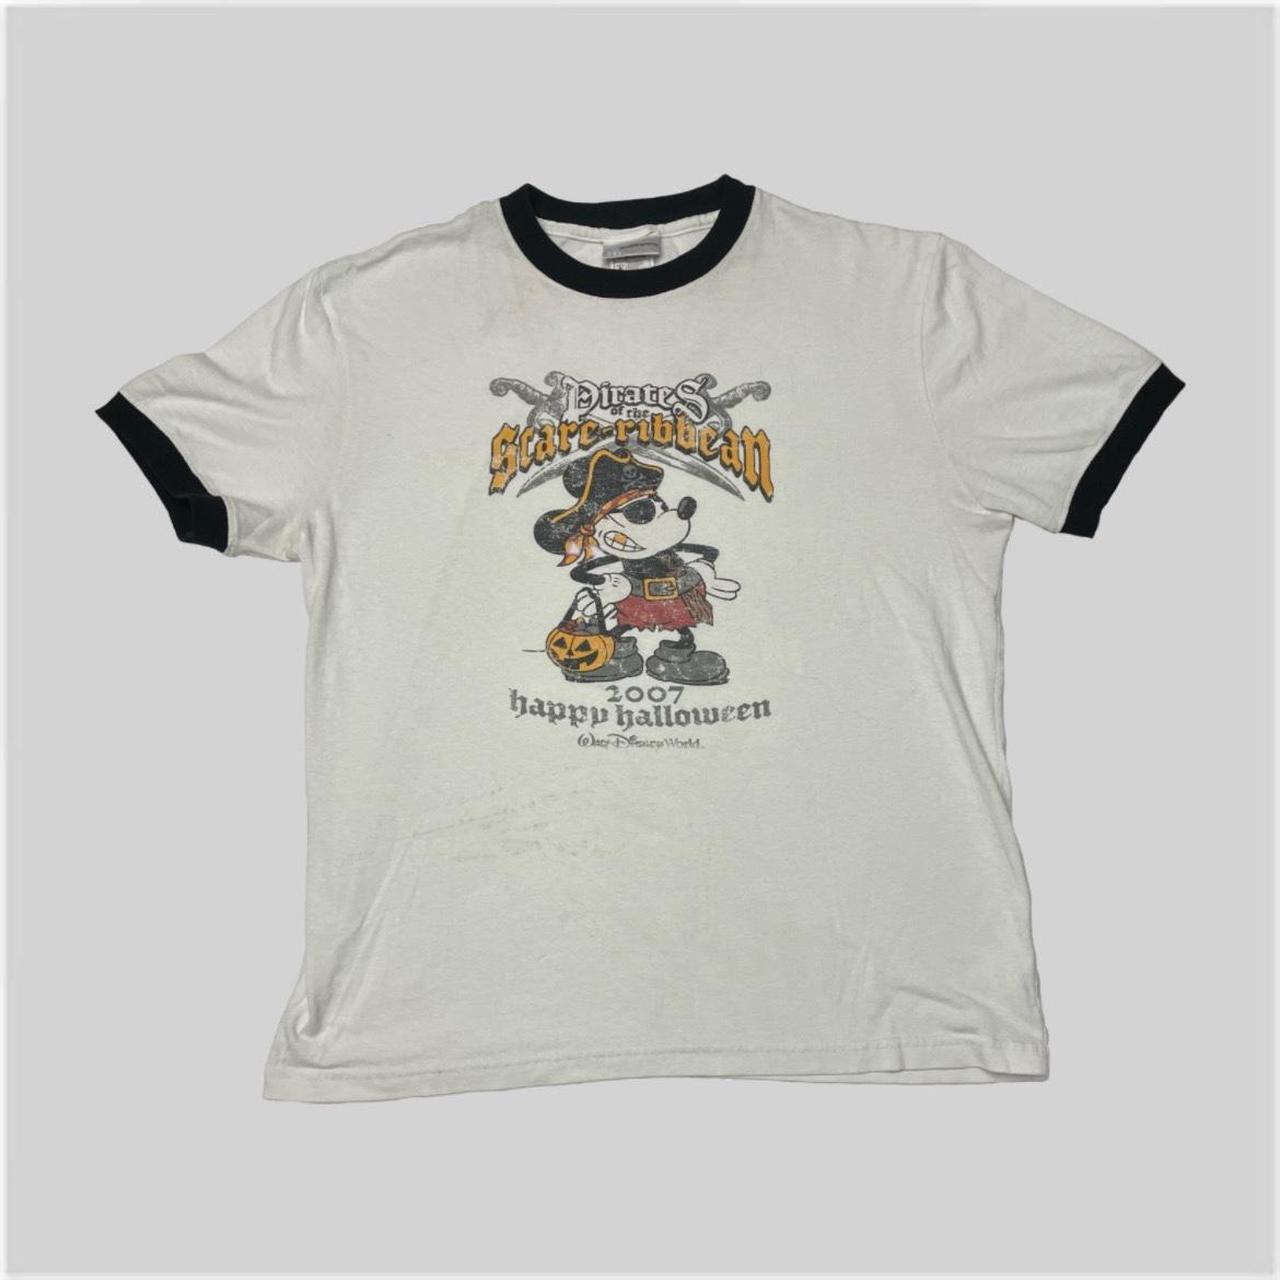 Vintage Pirates Of The Caribbean Walt Disney World Shirt Mickey